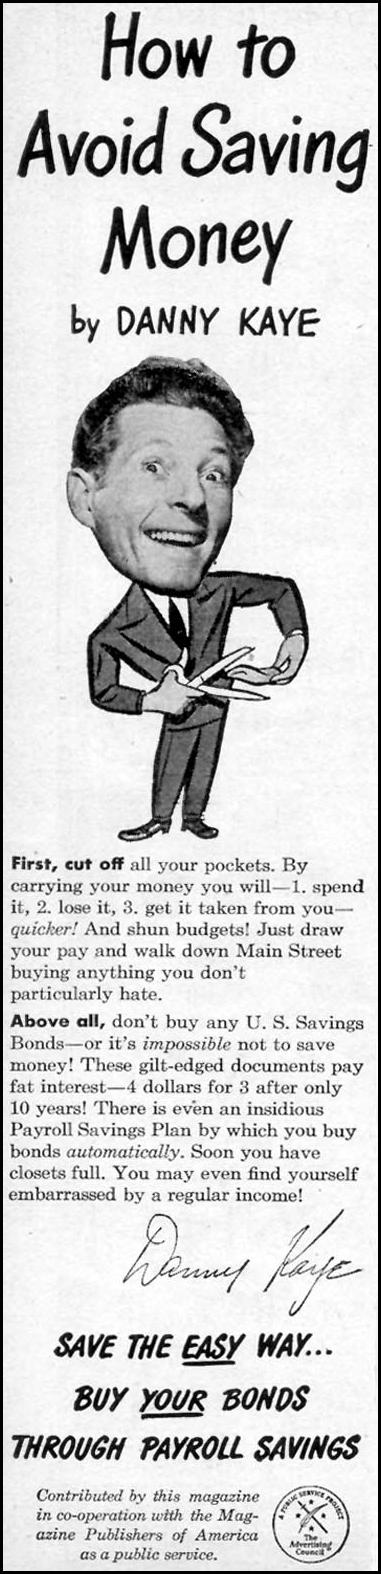 UNITED STATES SAVINGS BONDS
WOMAN'S DAY
06/01/1947
p. 76